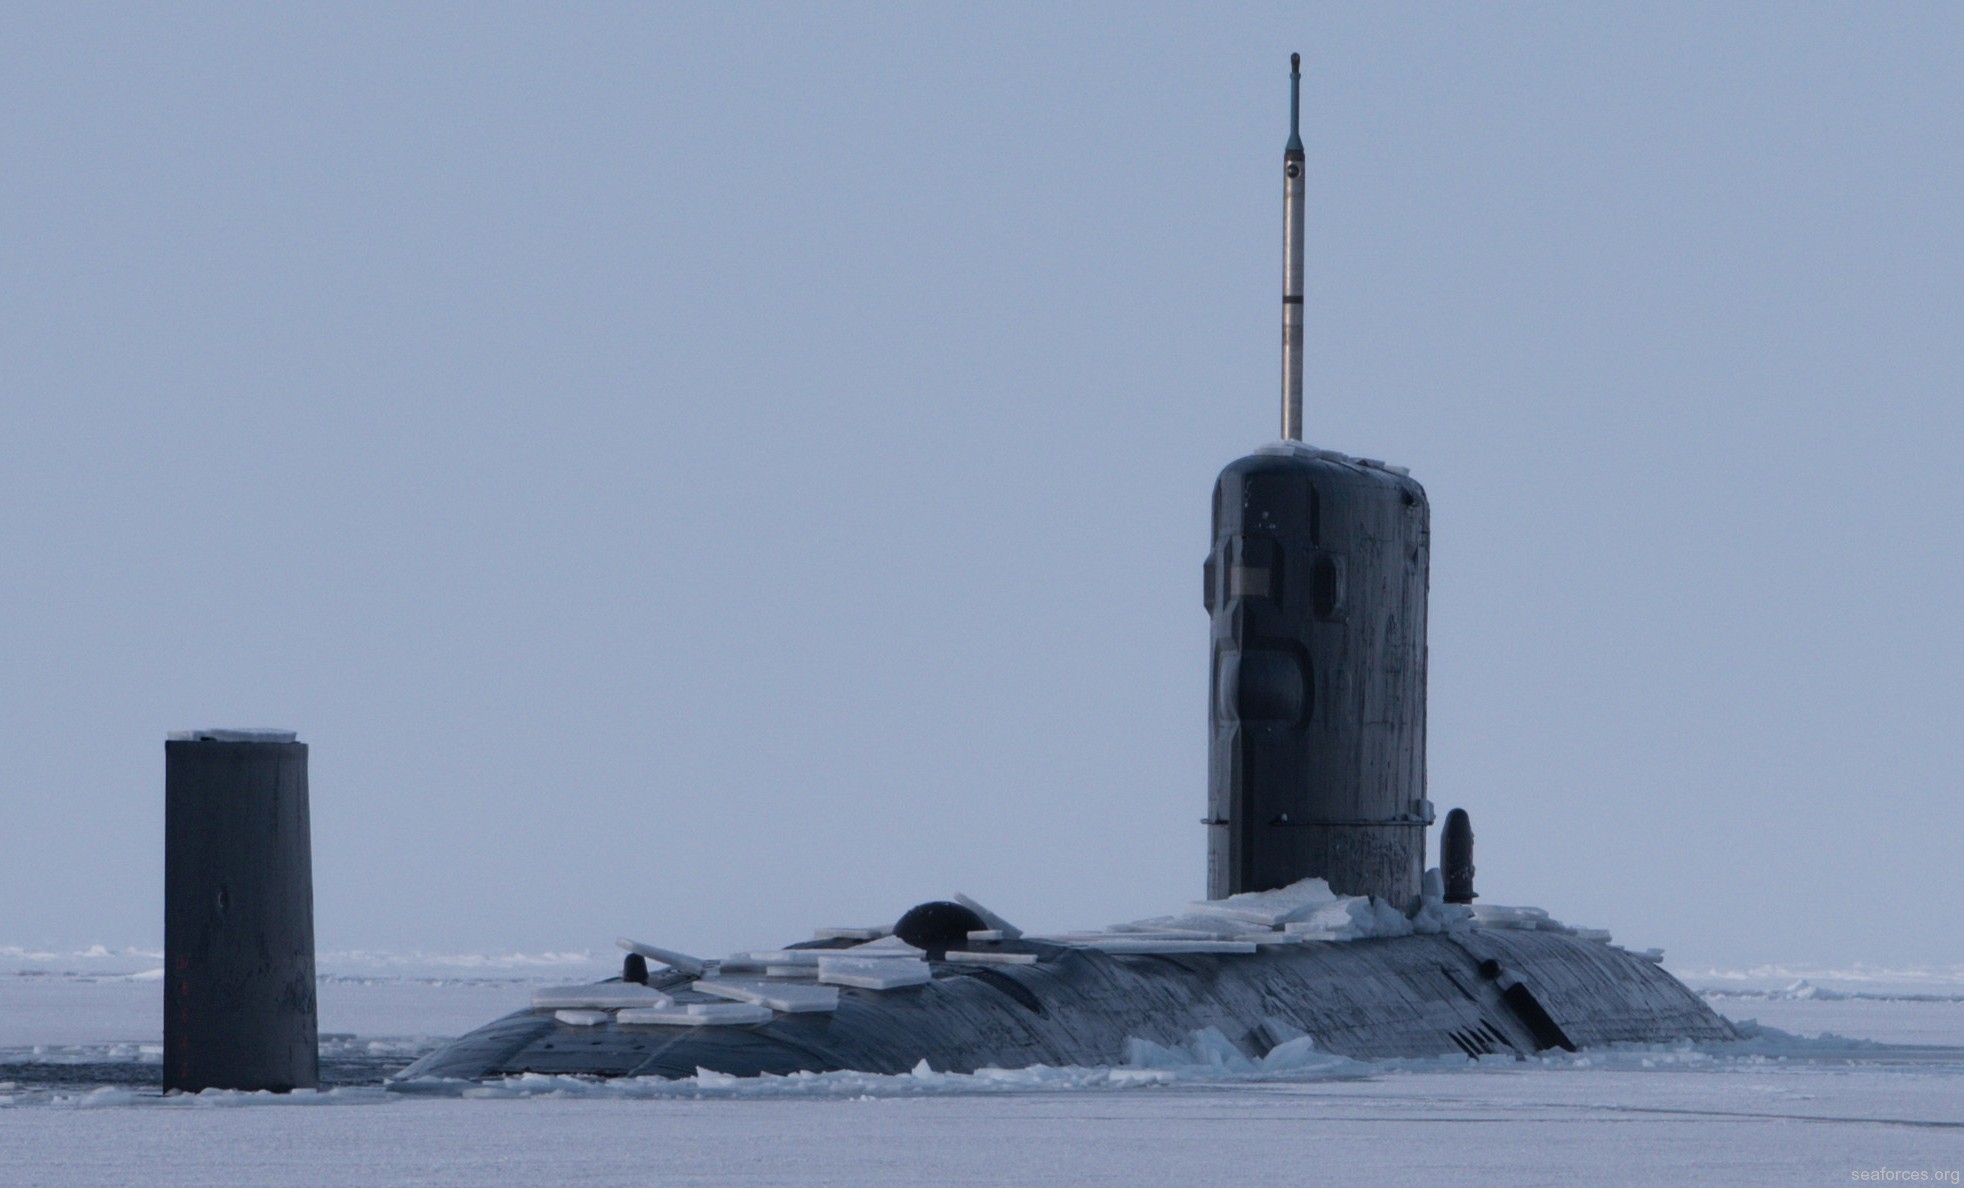 s91 hms trenchant trafalgar class attack submarine hunter killer royal navy 13